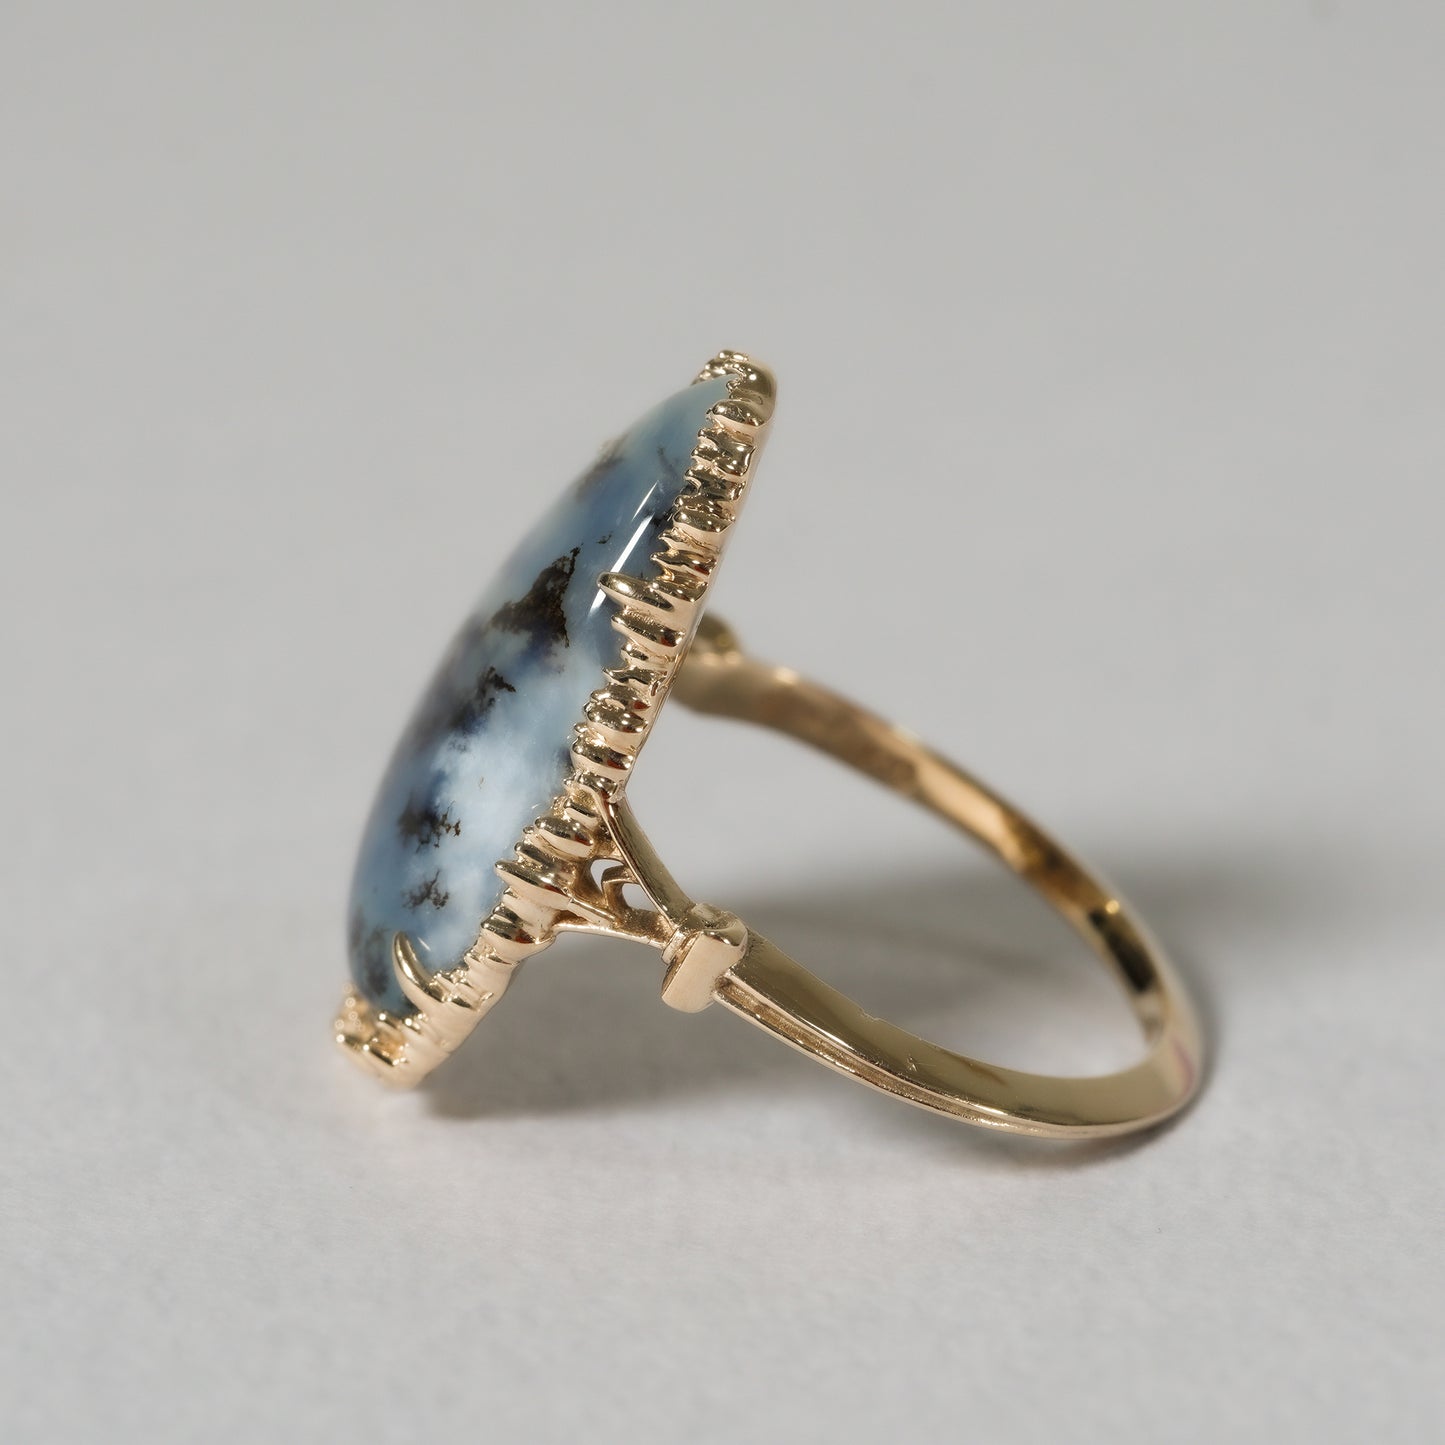 1064 Dendritic Blue Opal / Ring